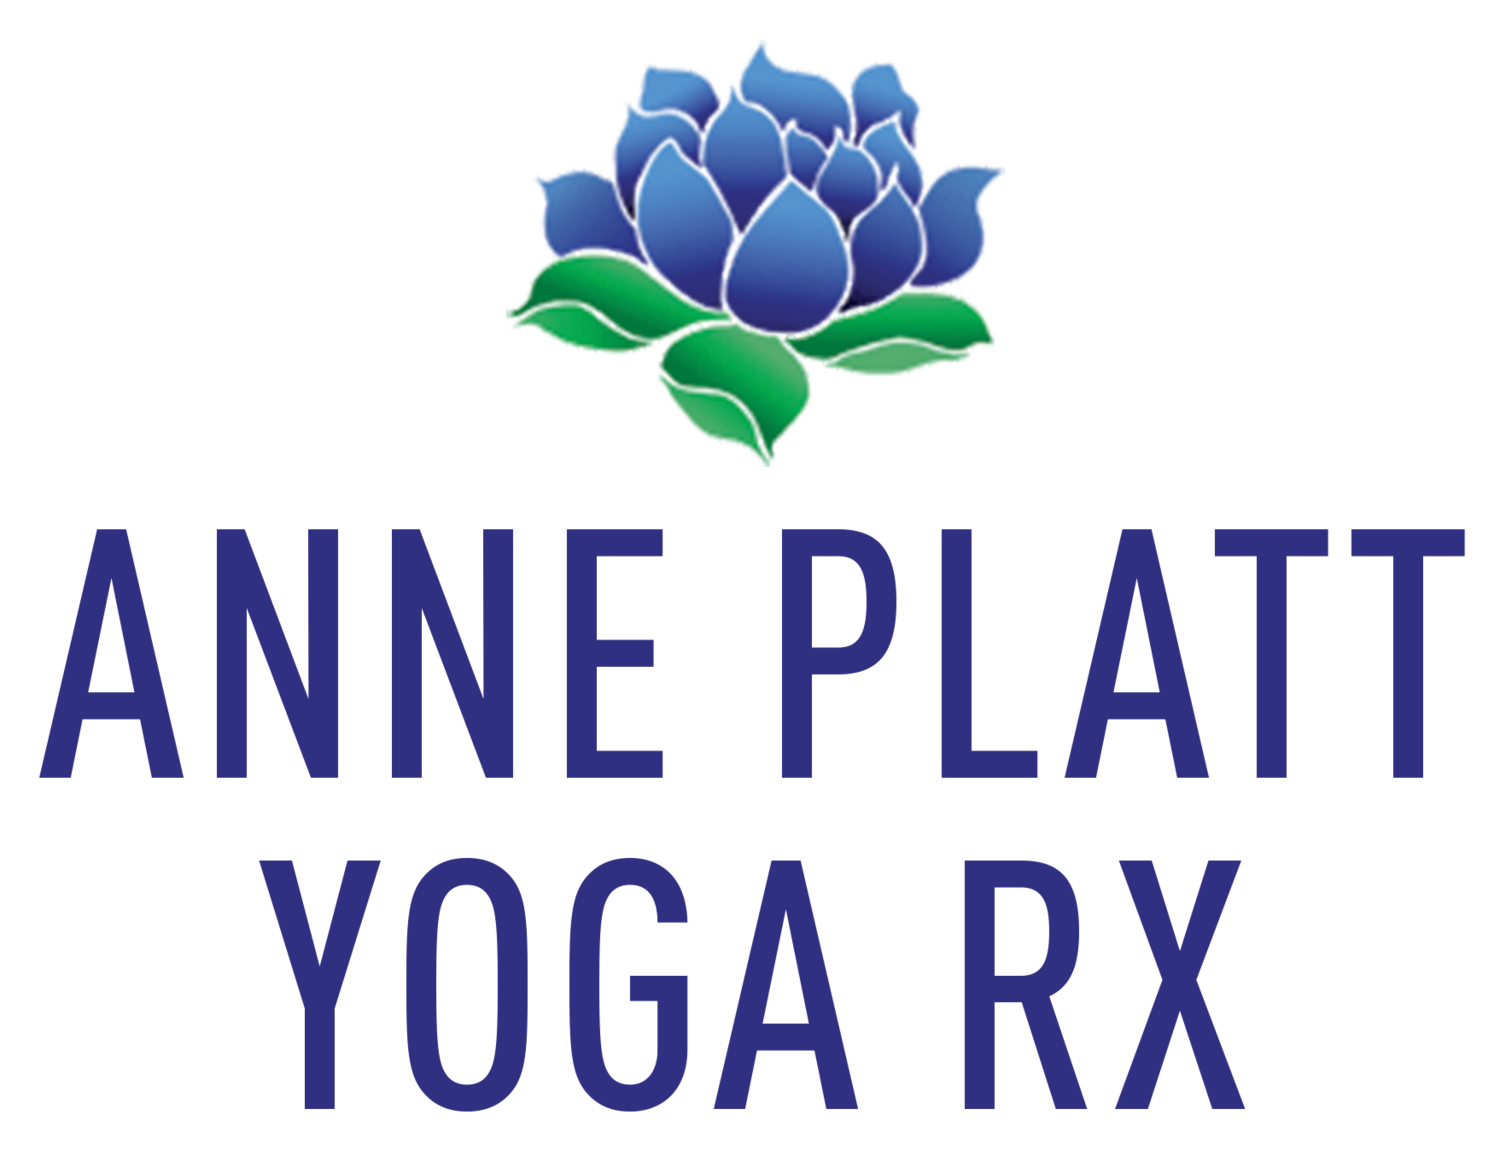 Anne Platt Yoga RX